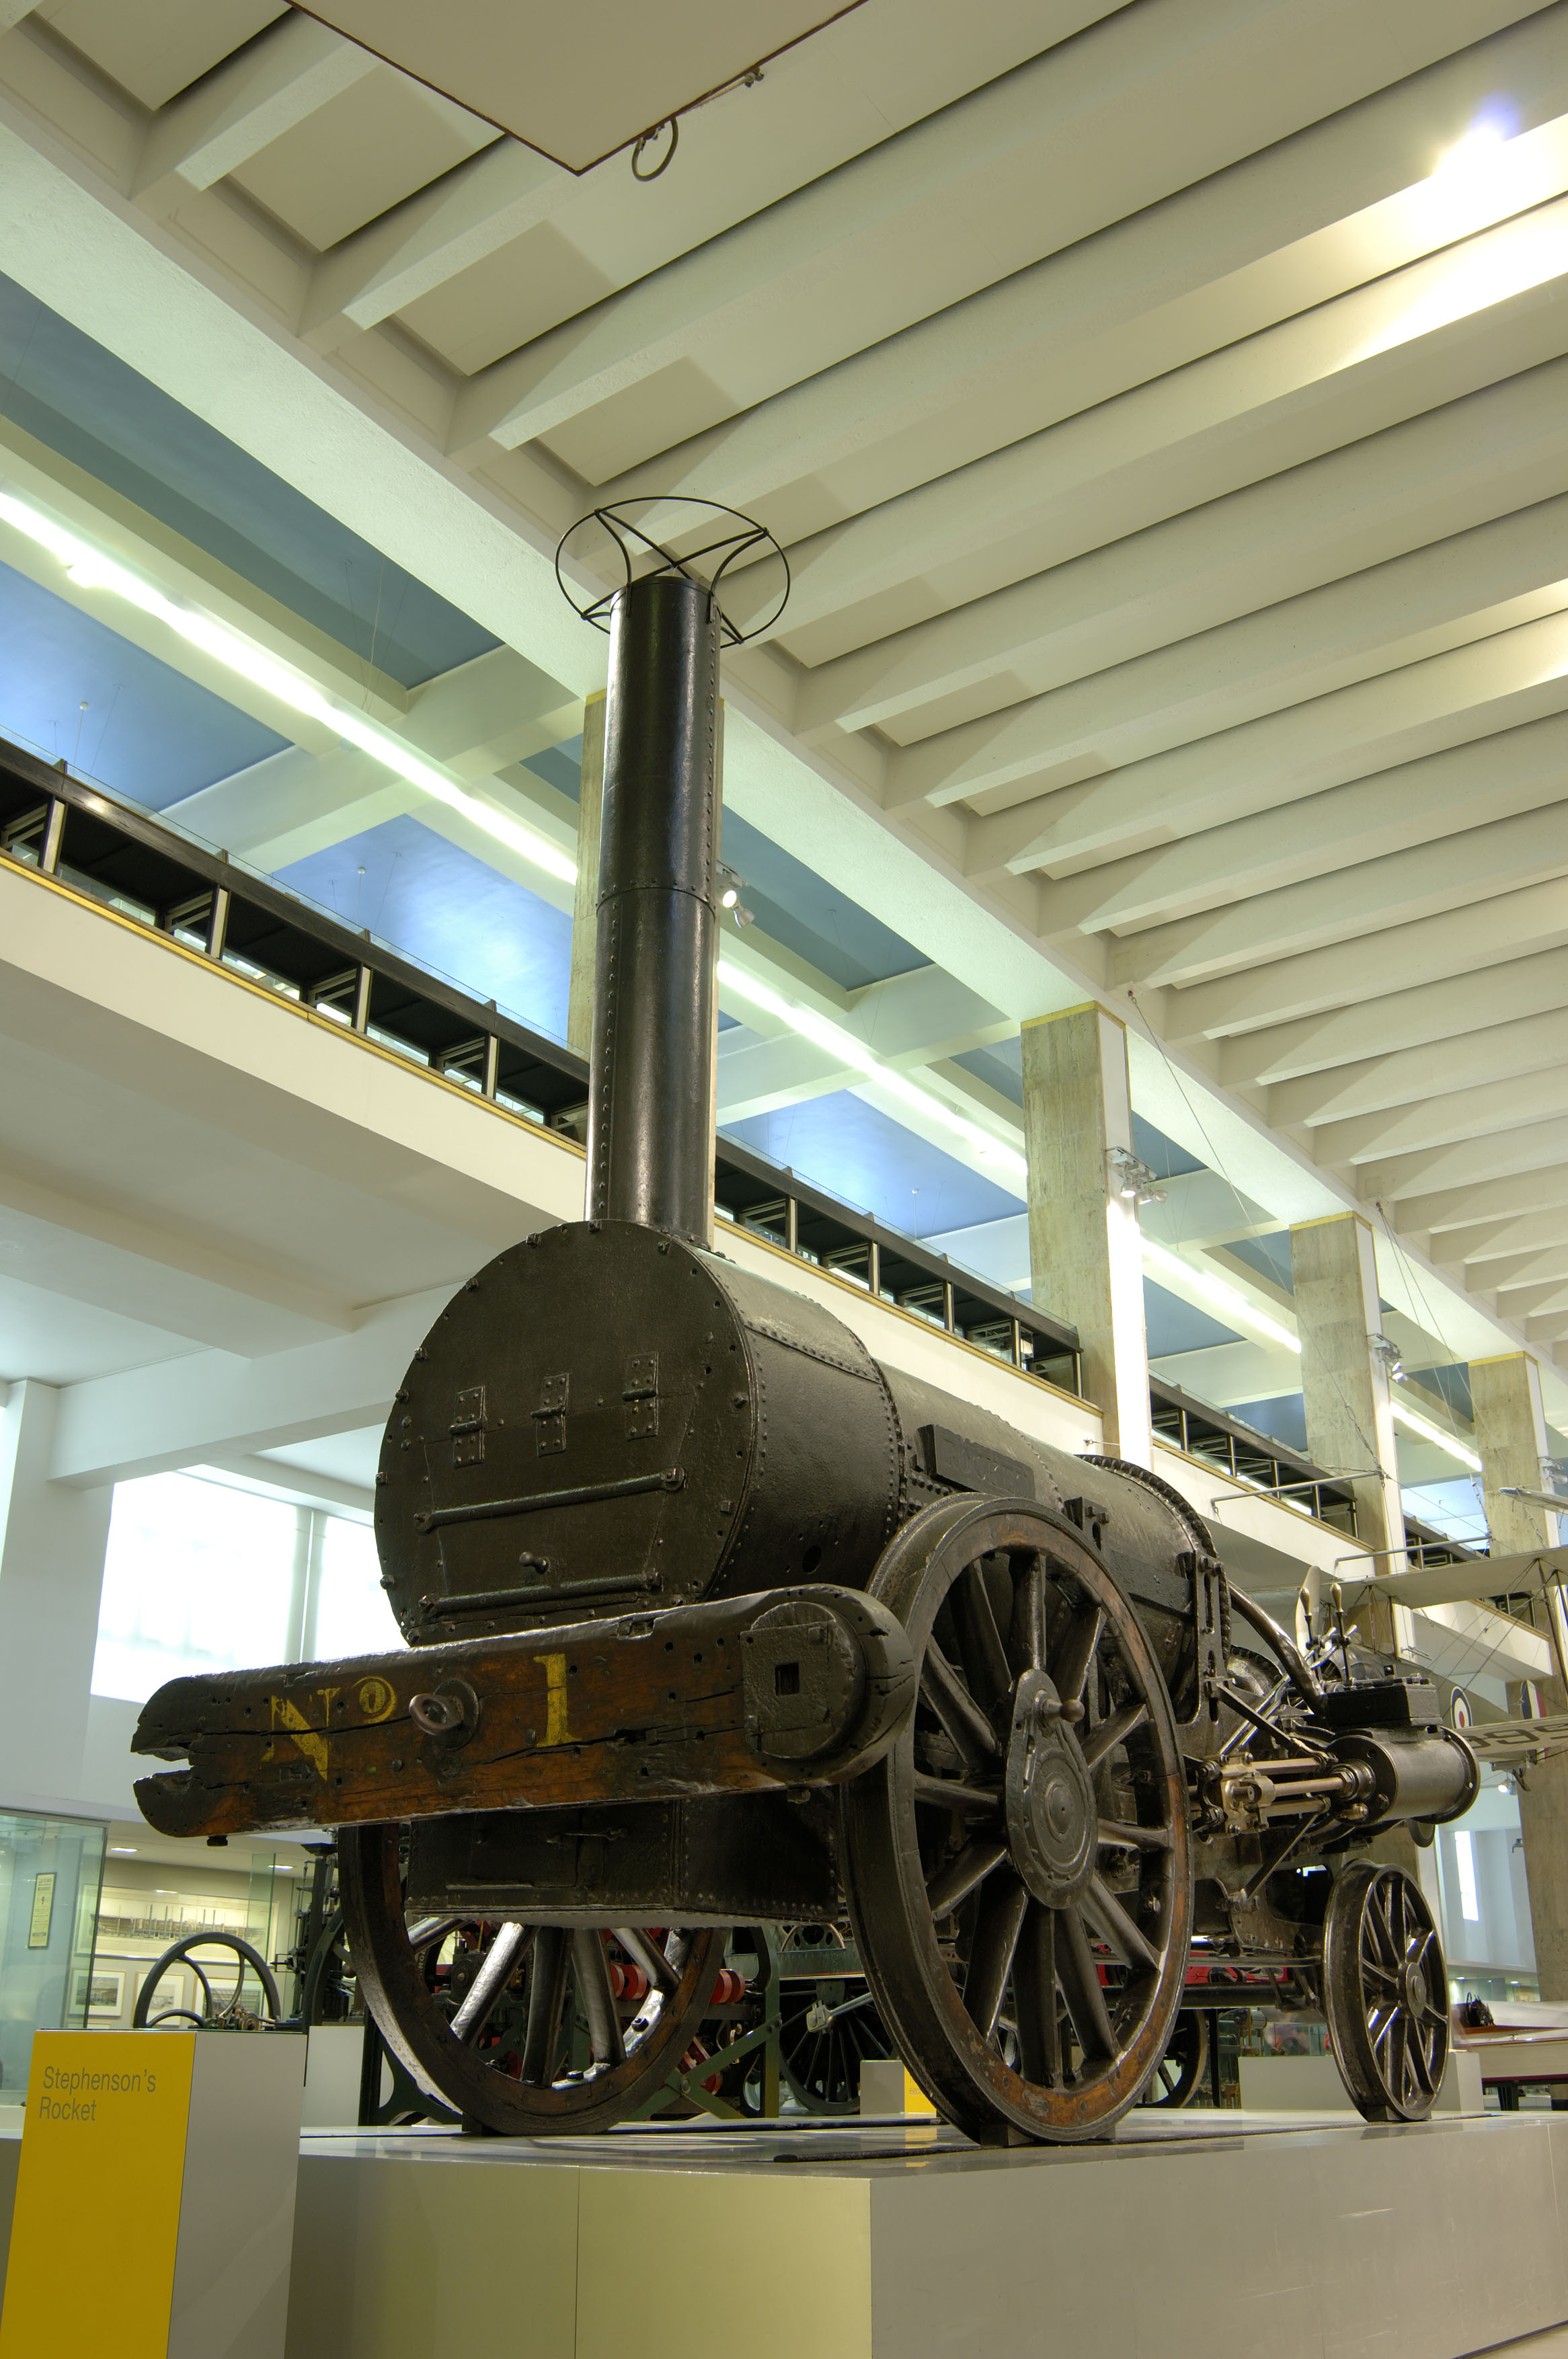 Stephenson's Rocket locomotive, 1829.